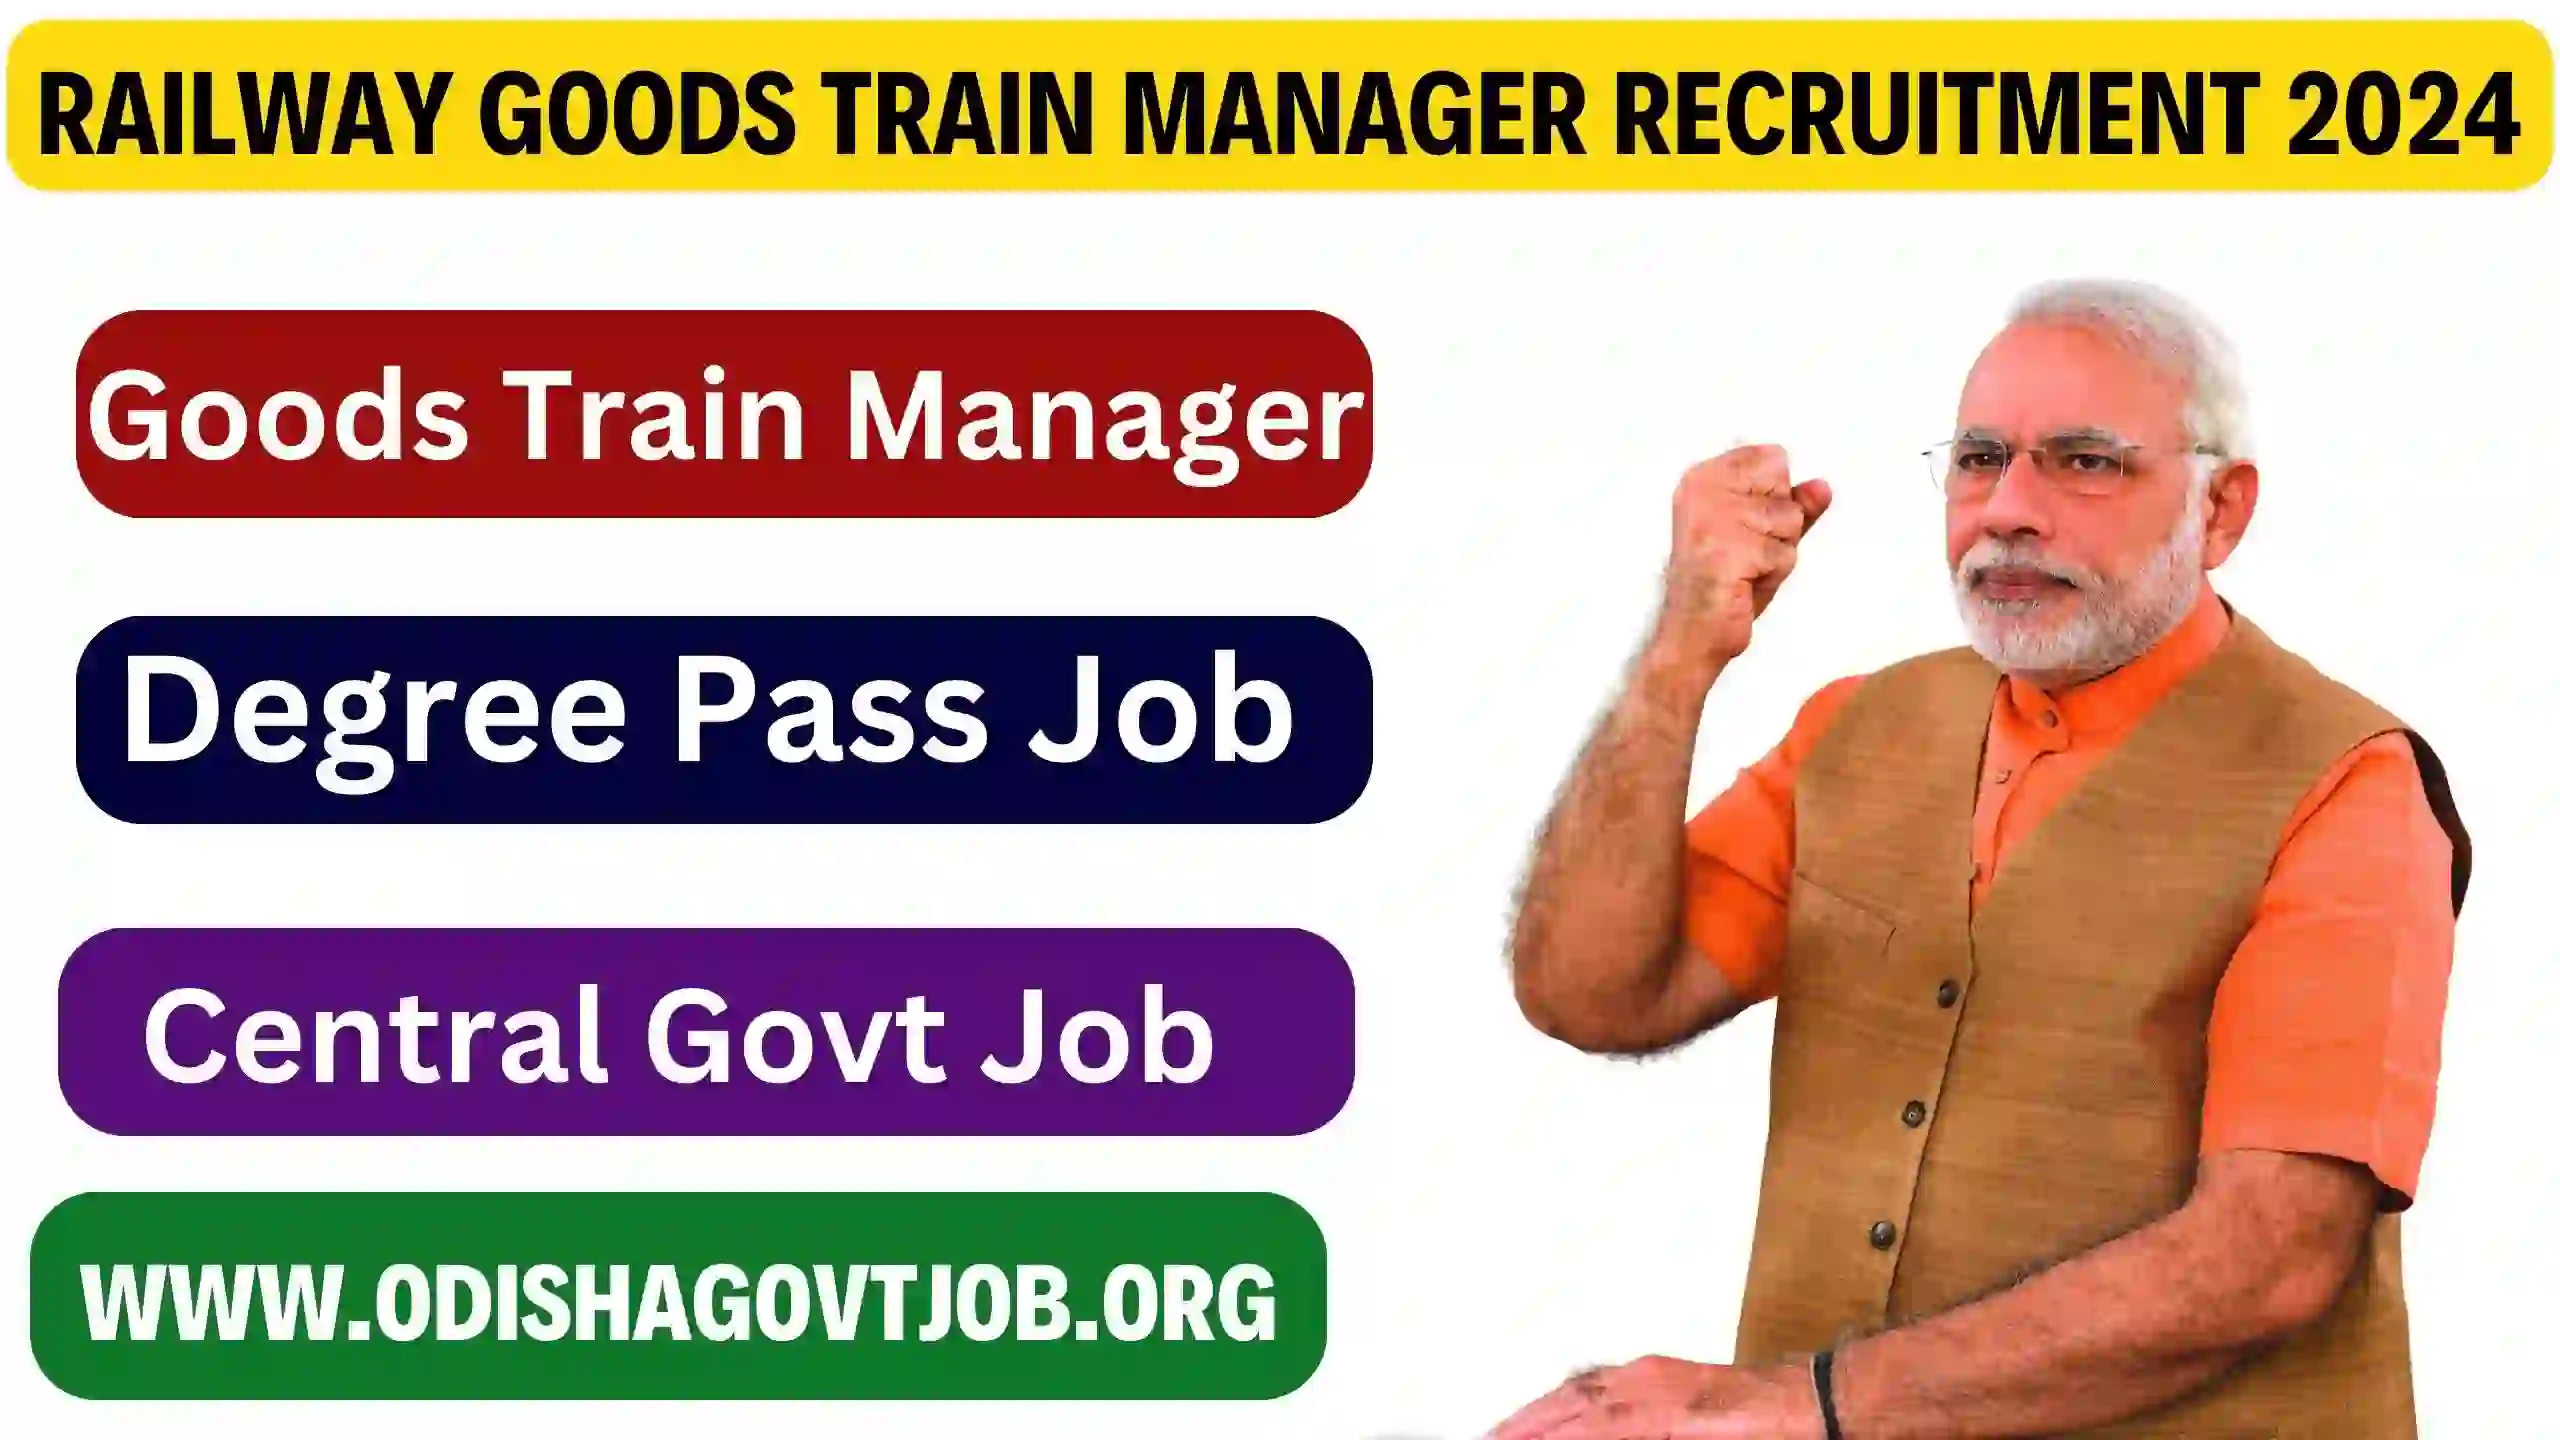 Railway Goods Train Manager Recruitment 2024